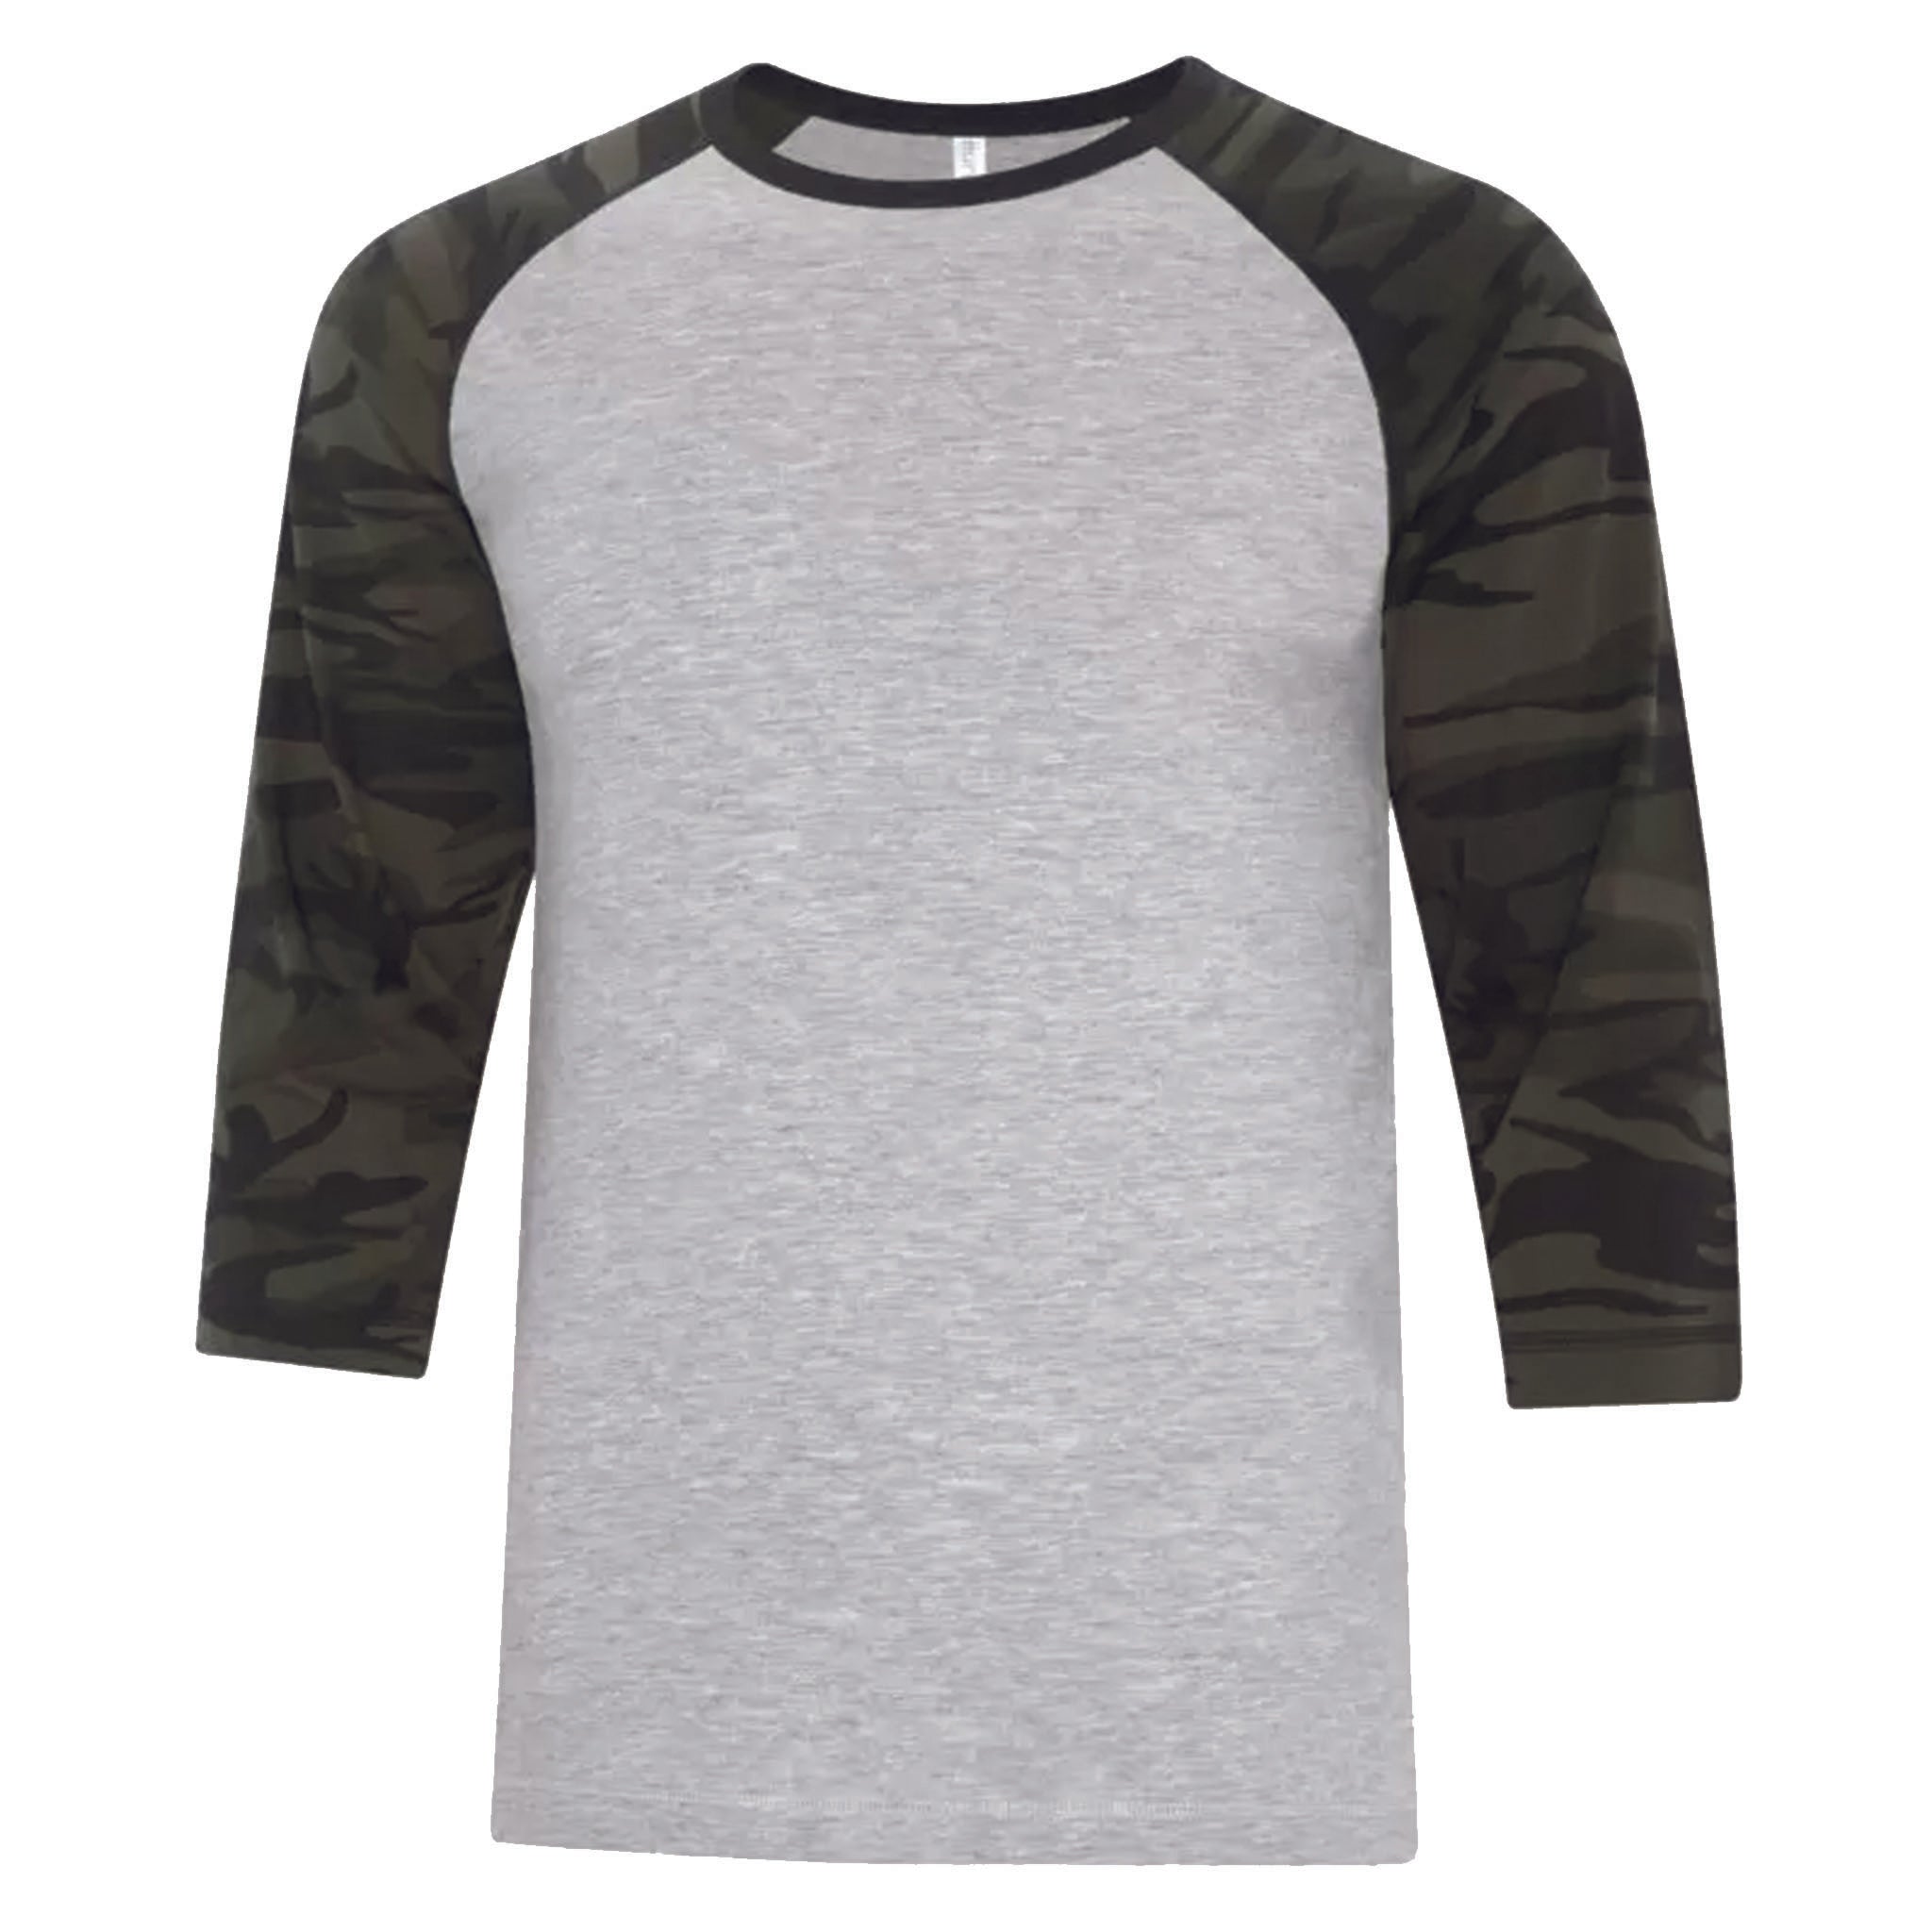 ATC Eurospun Baseball Two Tone T-Shirt - Men's Sizing XS-4XL - Athletic Grey/Black Camo